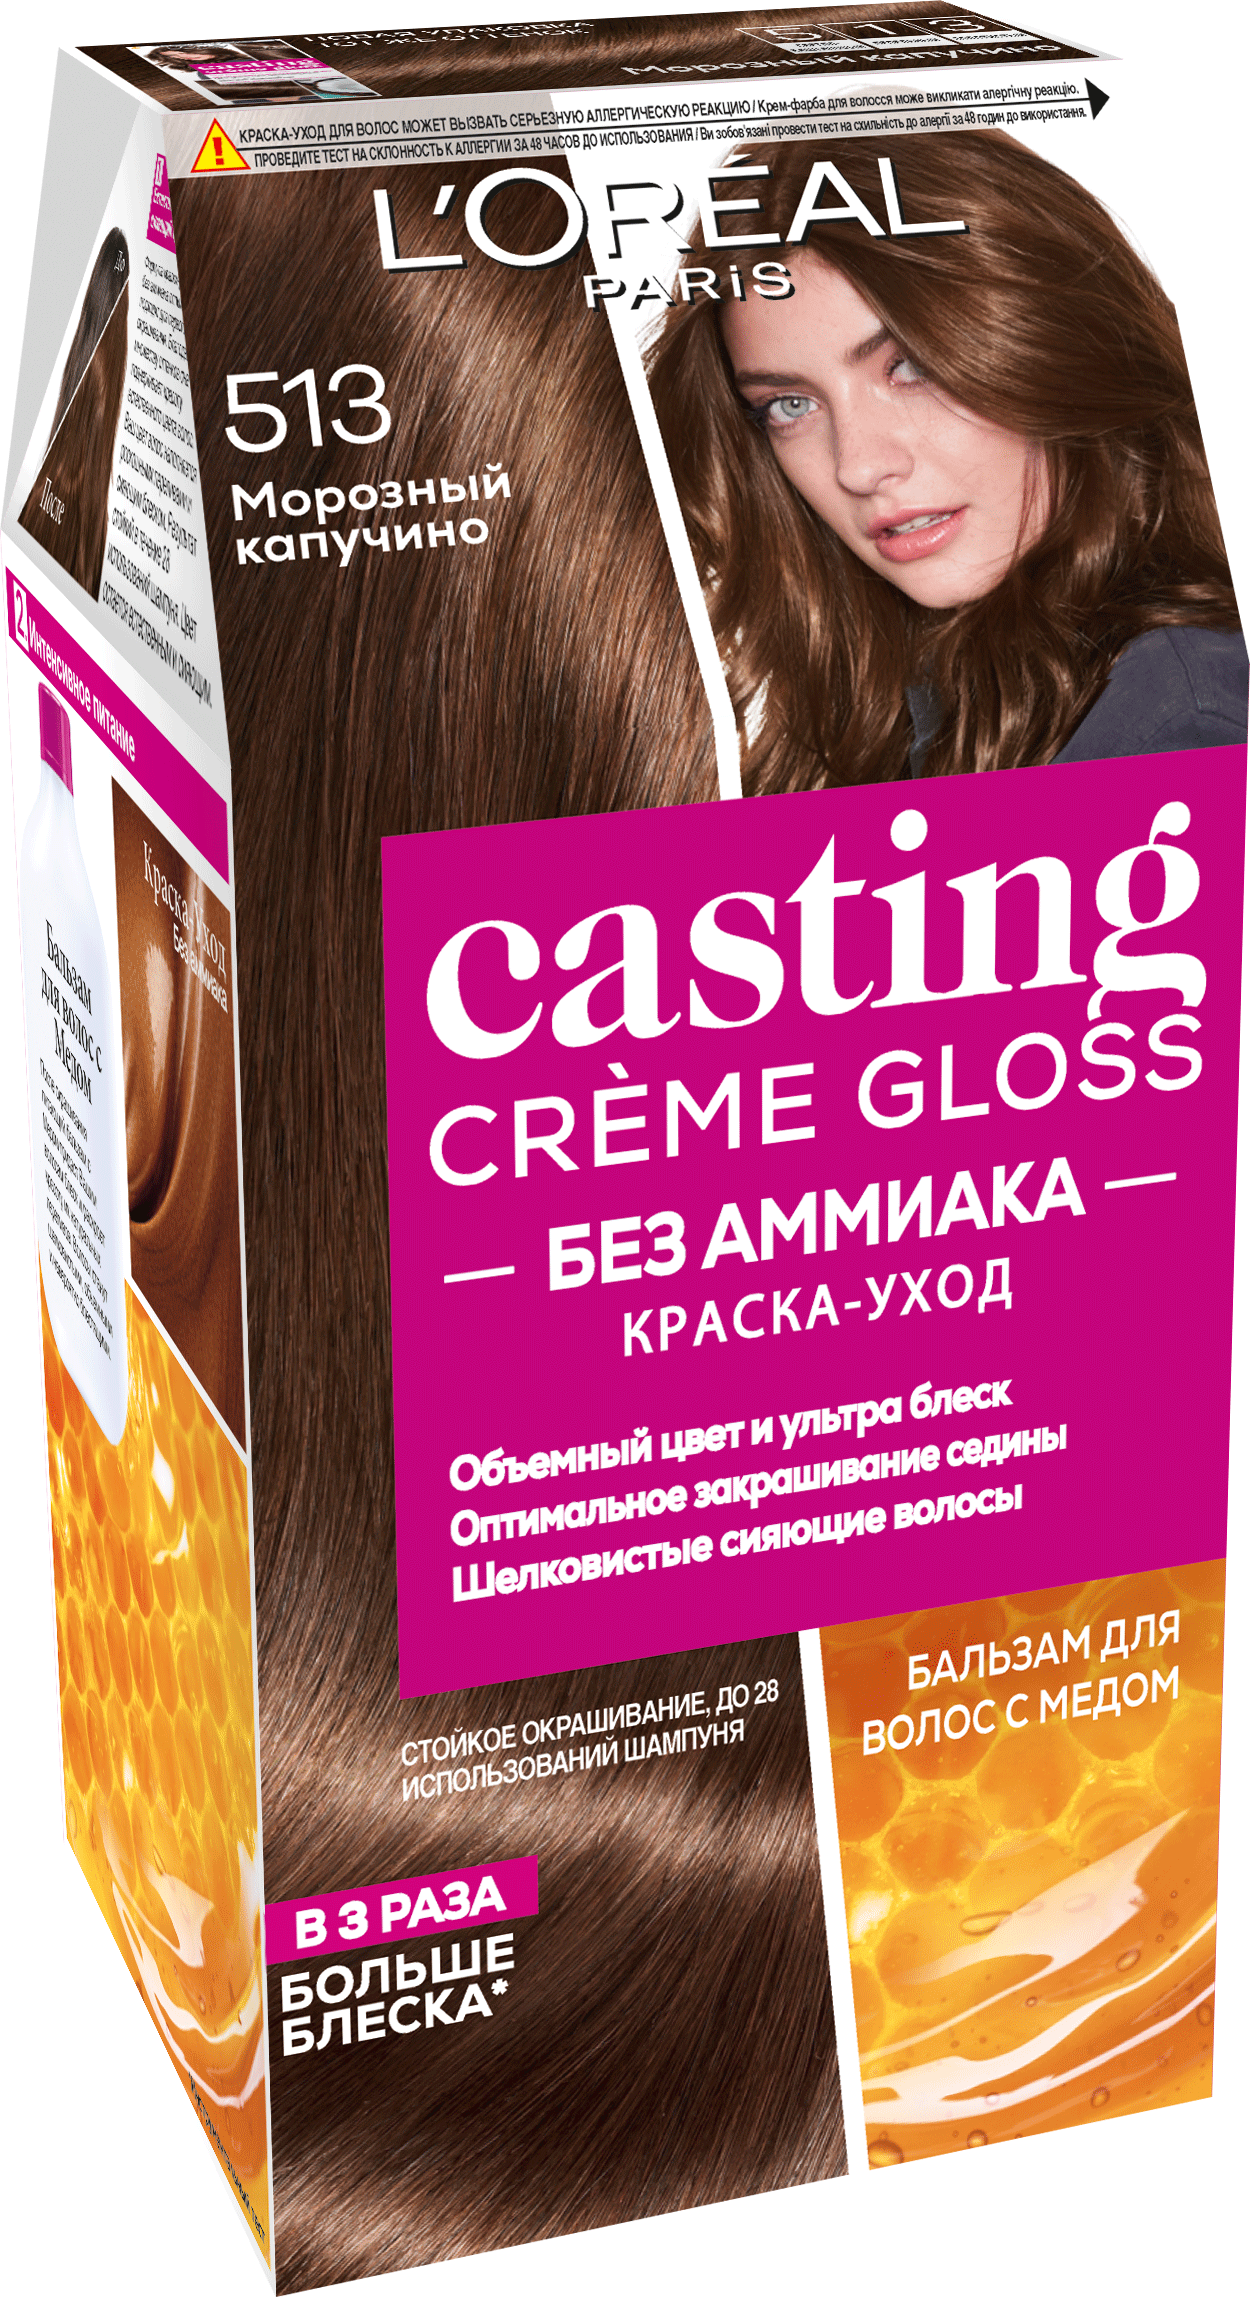 L'Oreal Paris Стойкая краска-уход для волос "Casting Creme Gloss" без аммиака, оттенок 513, Морозный капучино, 180мл